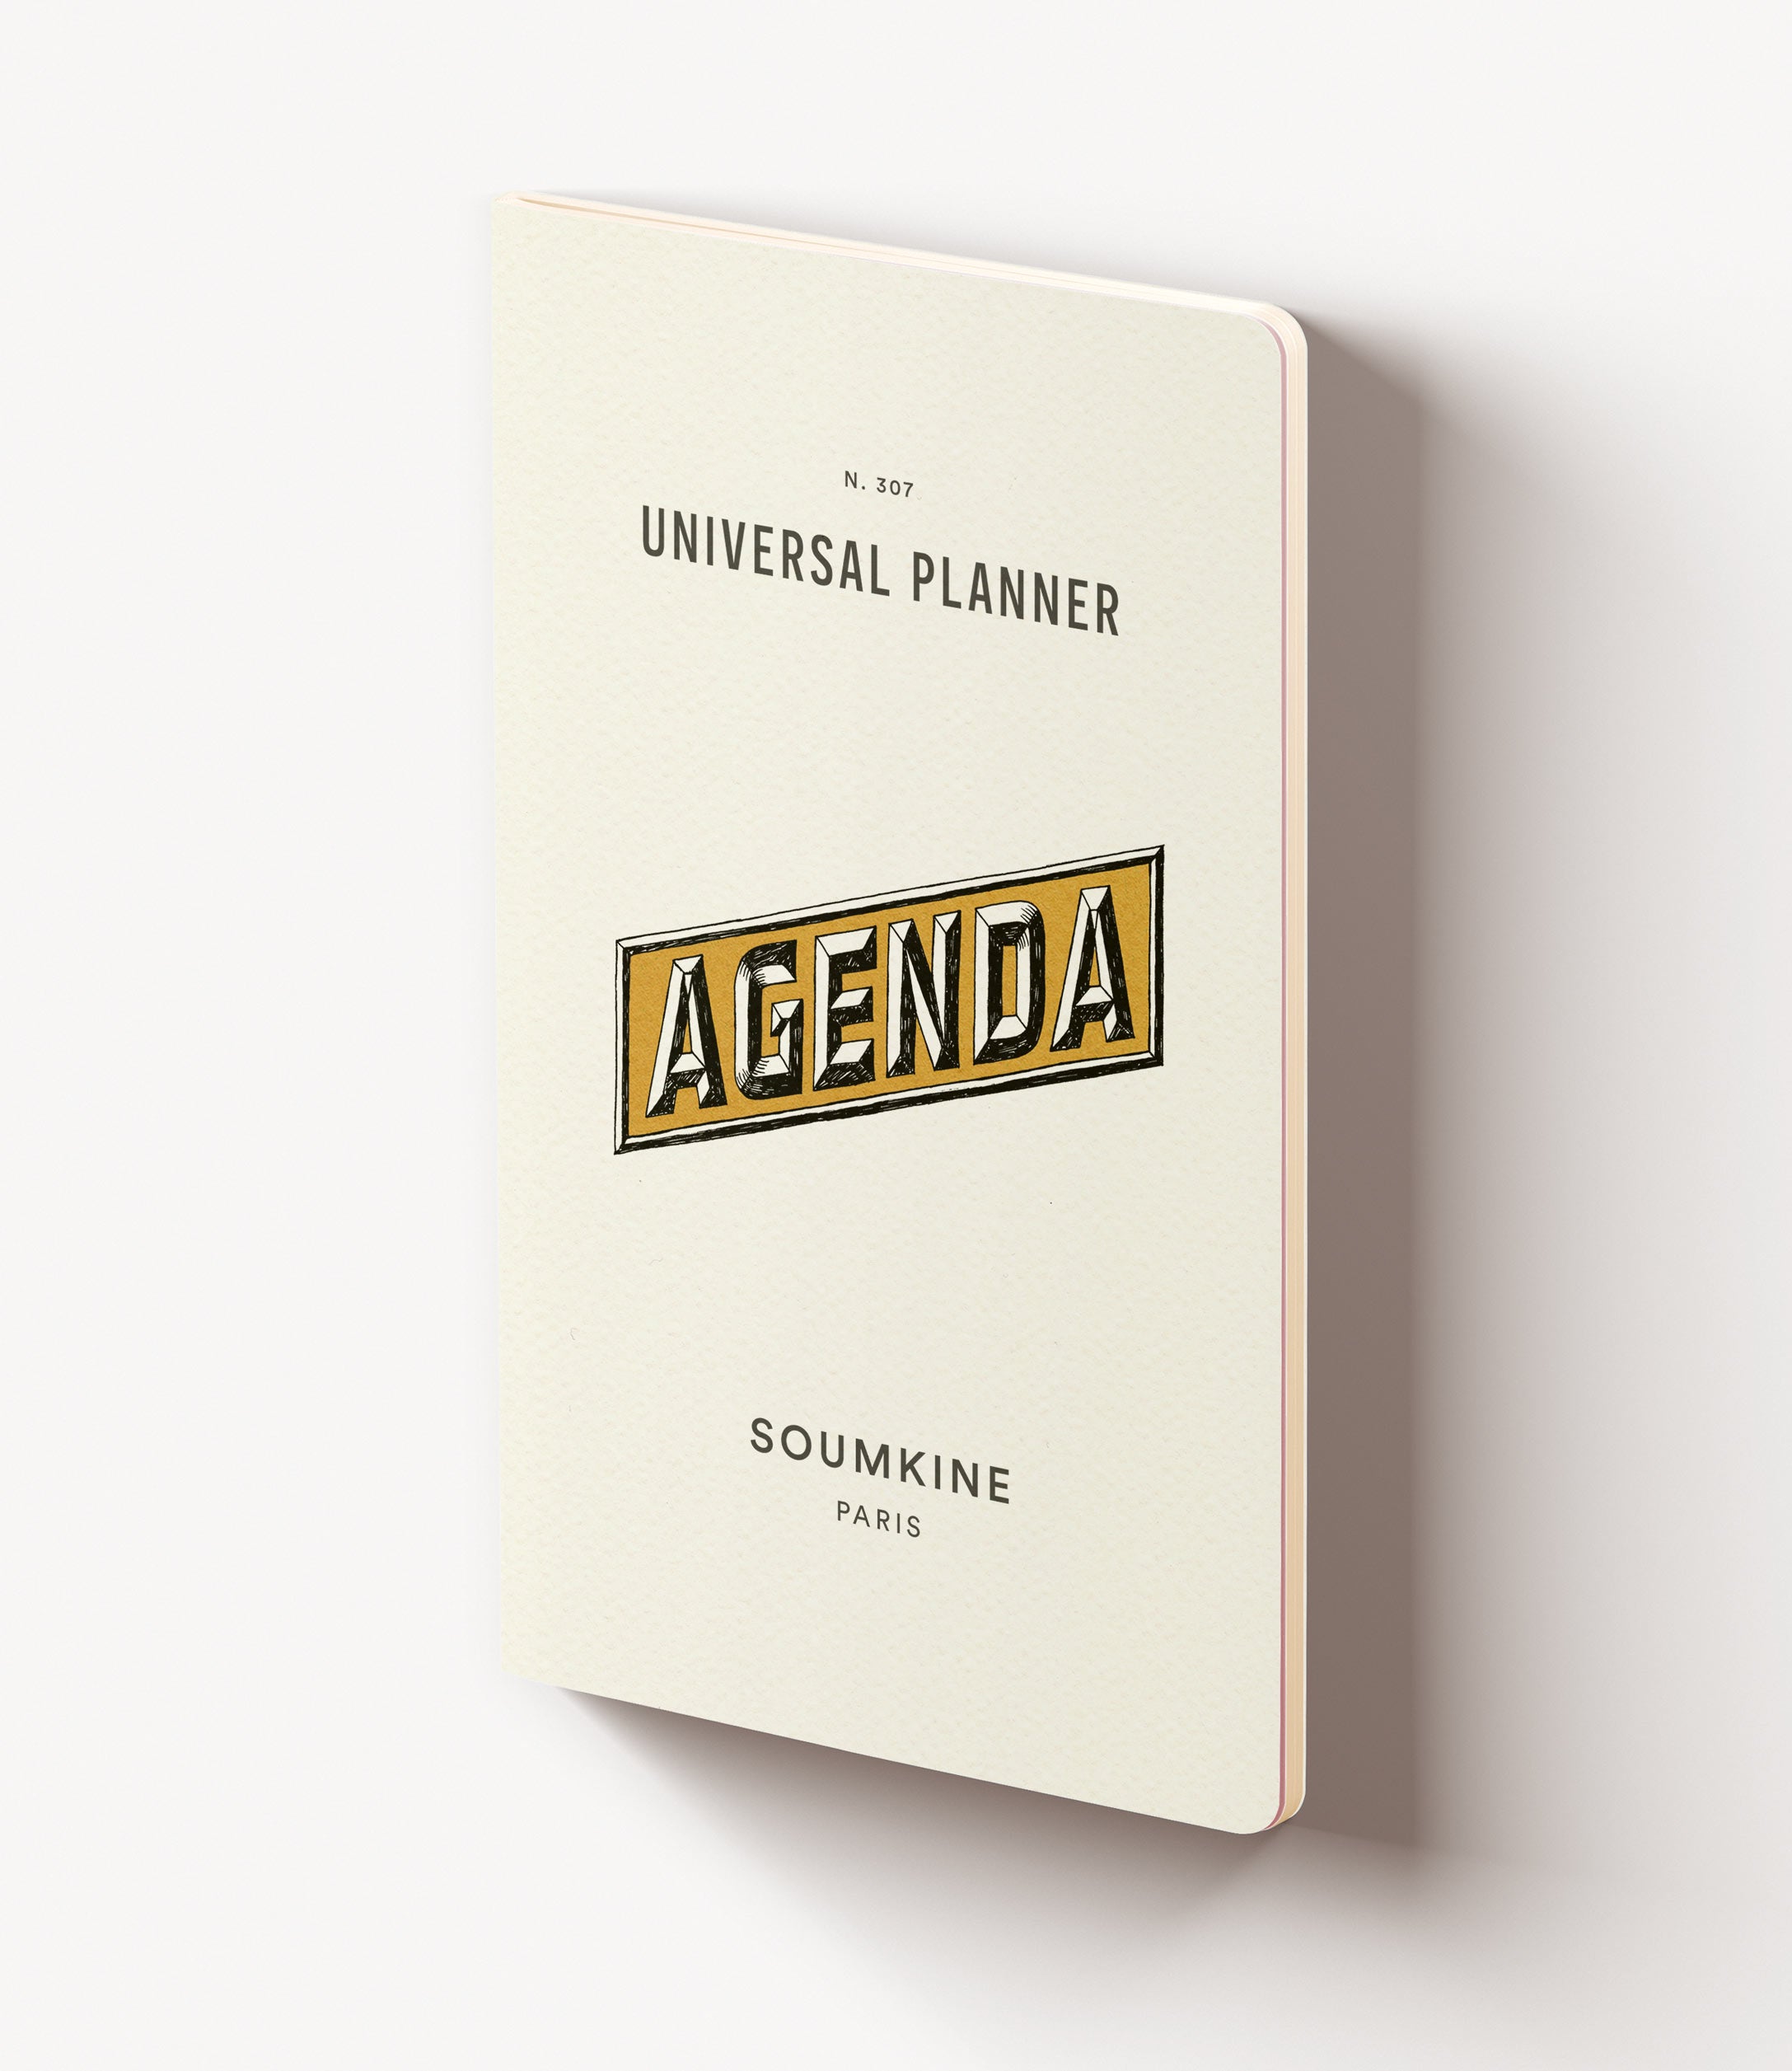 Universal Planner n.307. Agenda, Design Edition. Slim (regular) Size